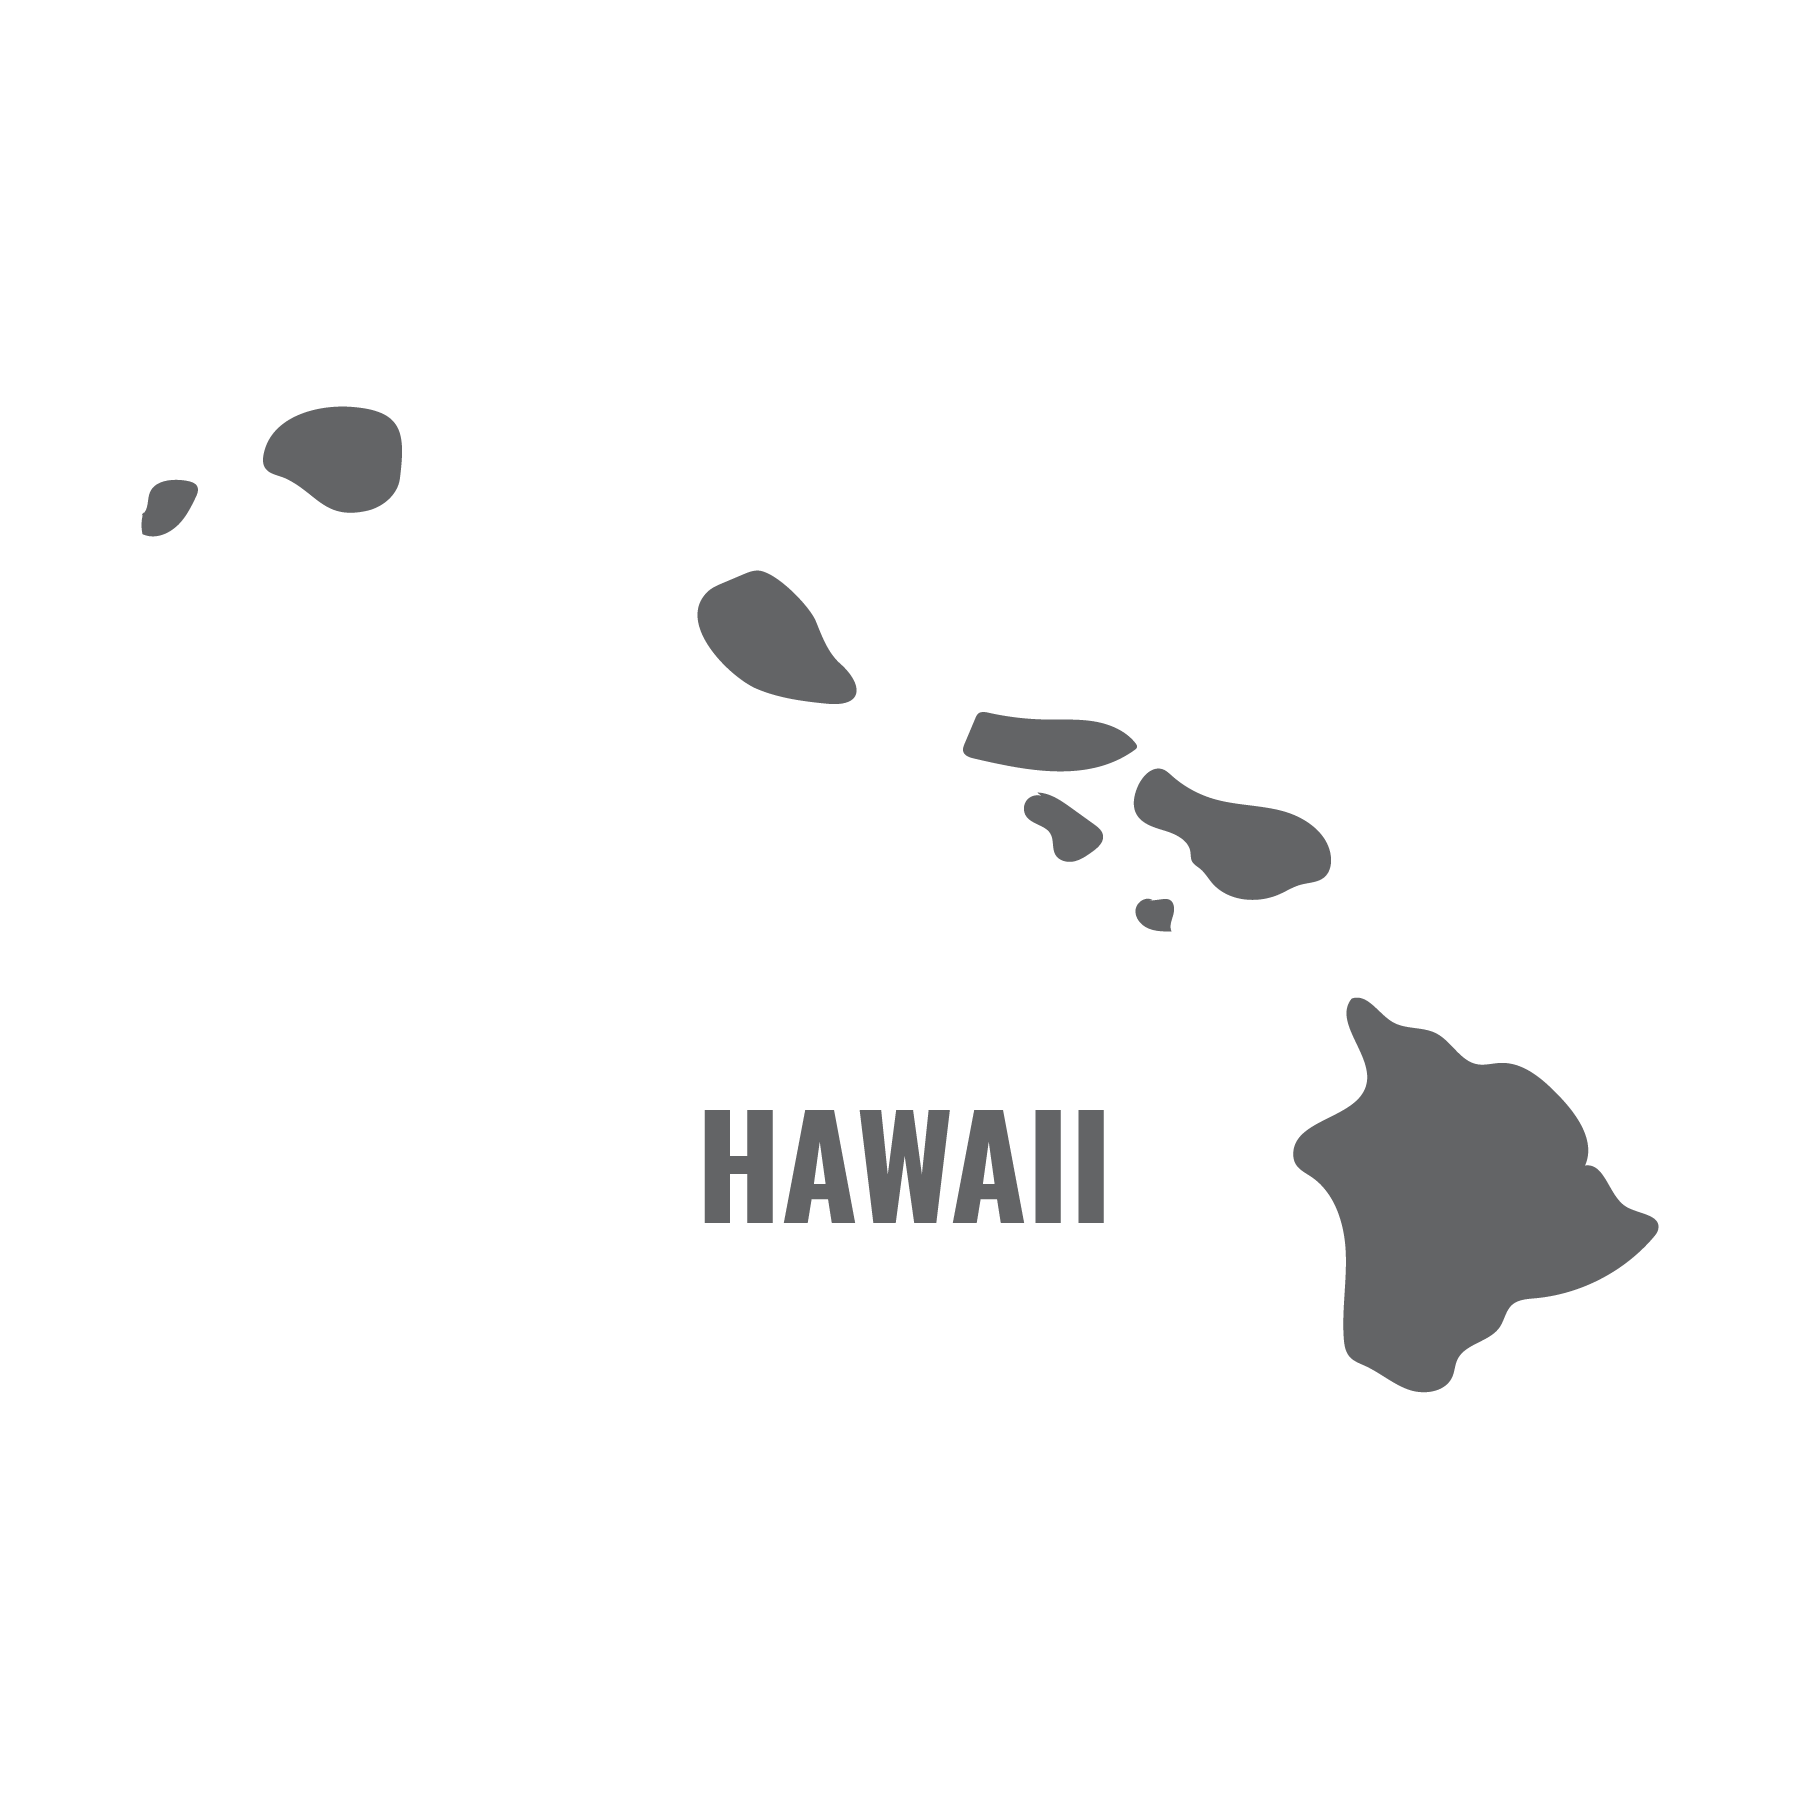 Hawaii State Image